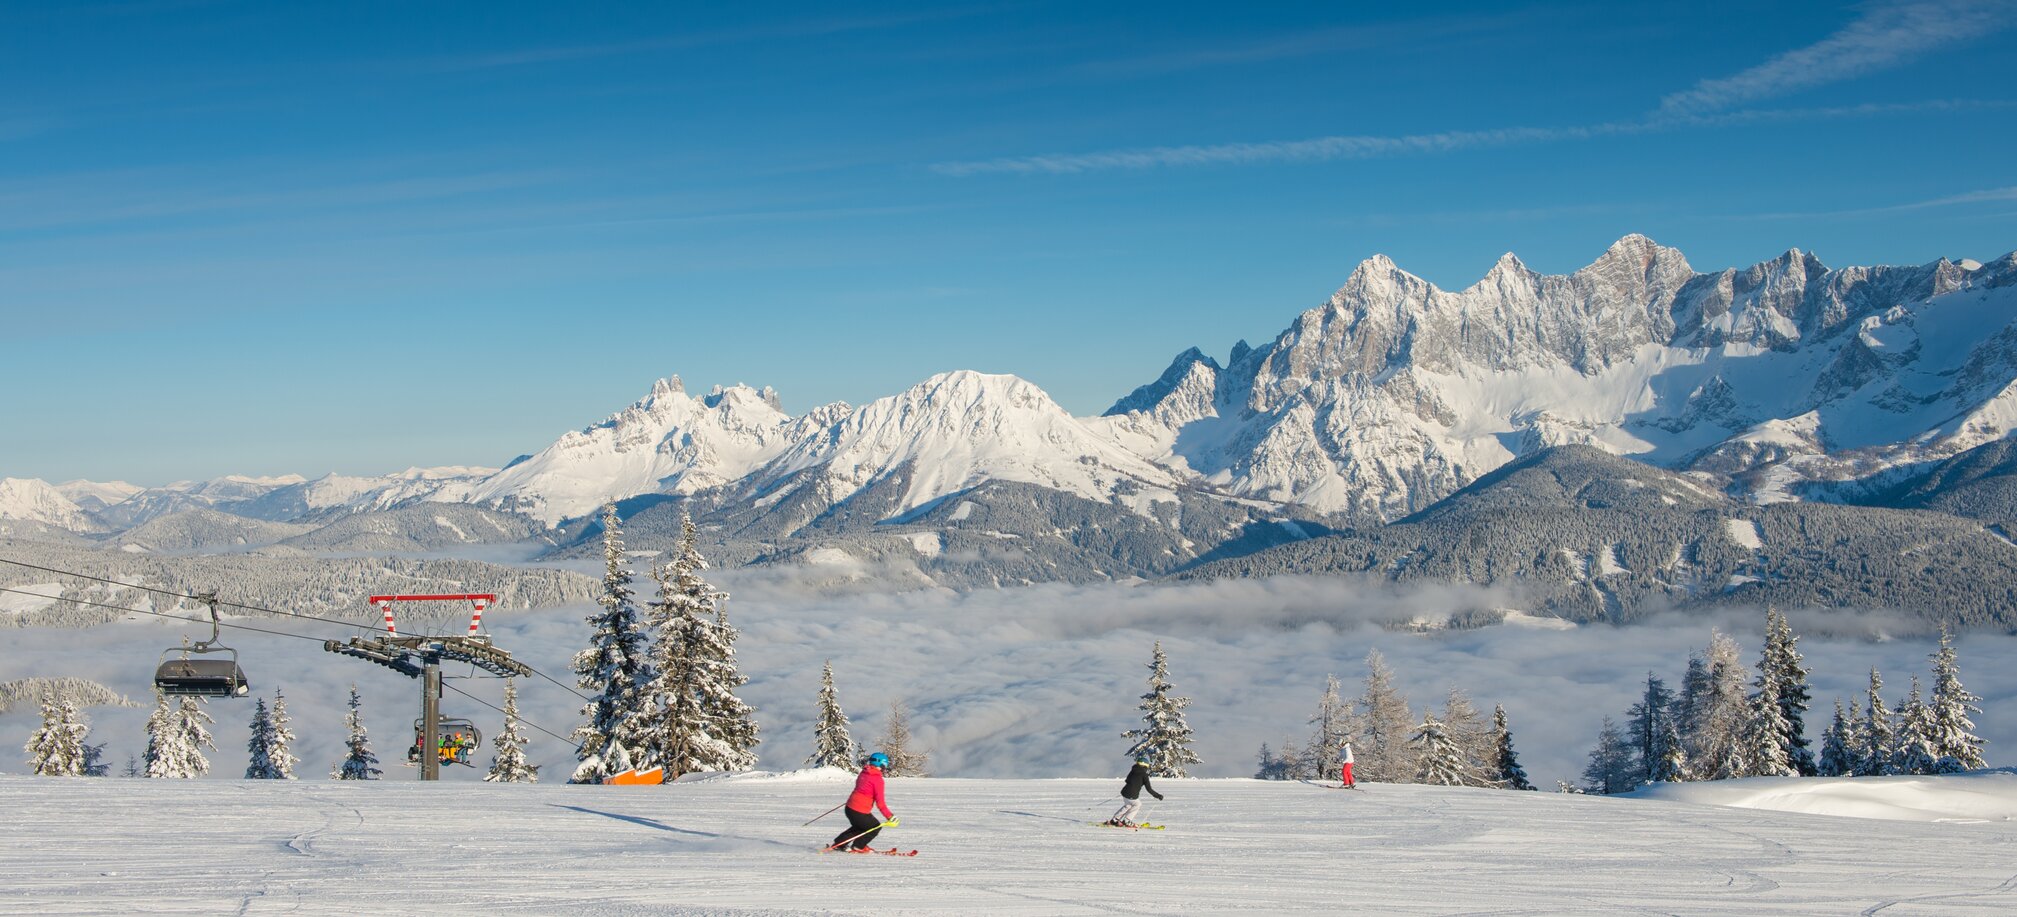 Ski area Reiteralm pistes | © Lorenz Masser